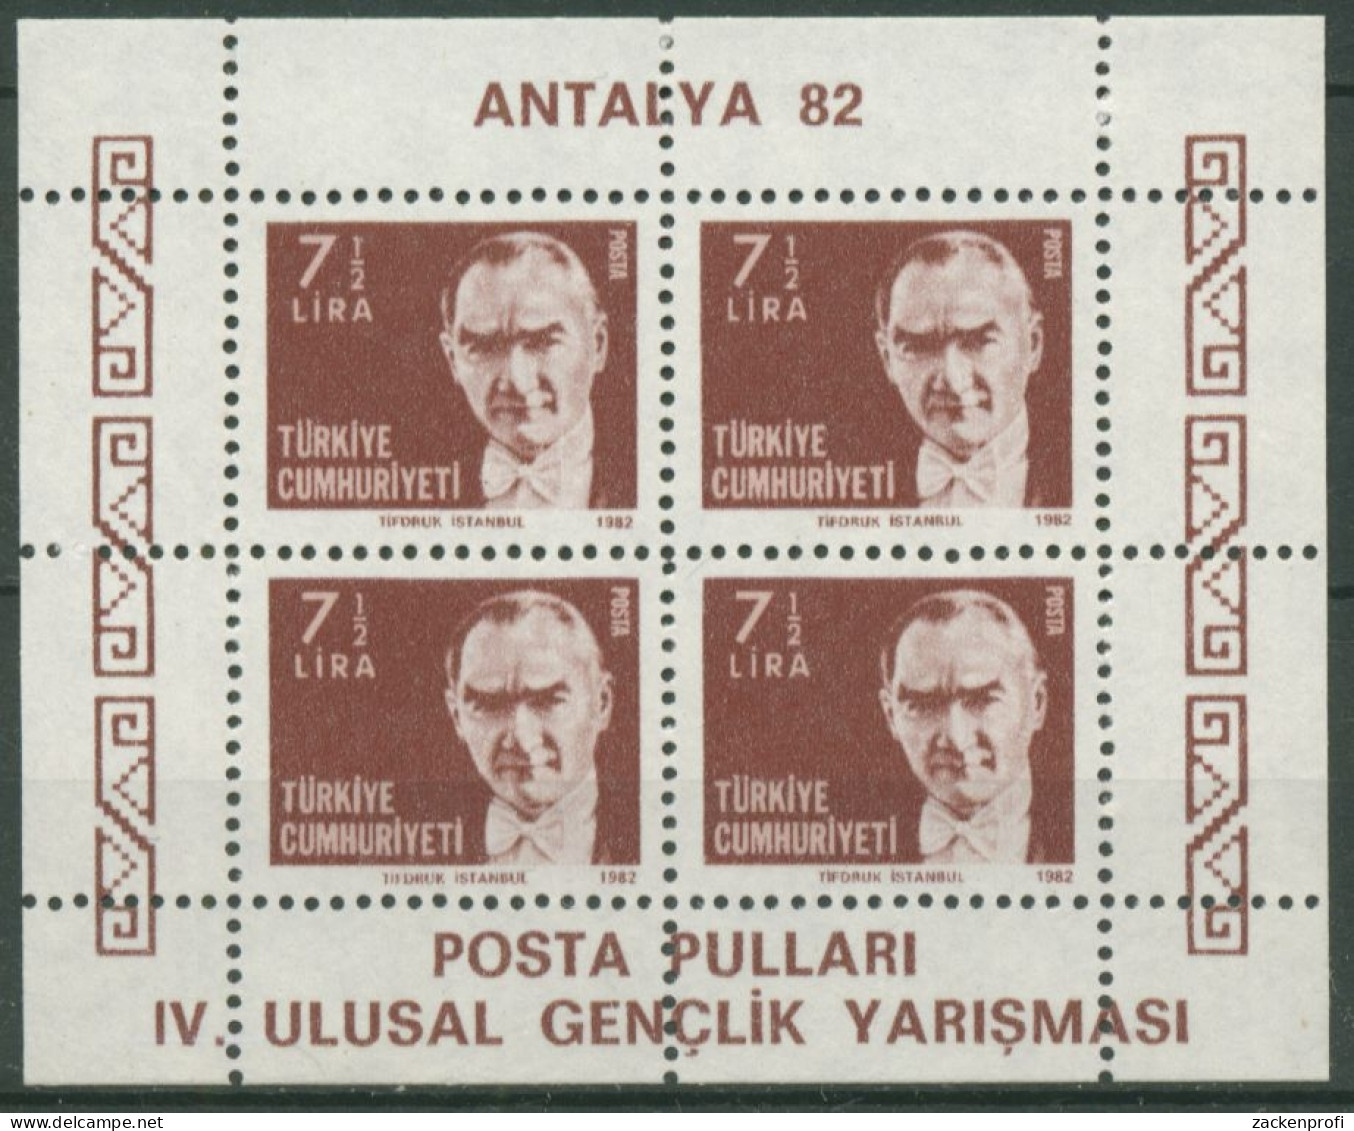 Türkei 1982 Jugend-Briefmarkenausstellung ANATLYA Block 22 A Postfrisch (C6712) - Blocks & Sheetlets